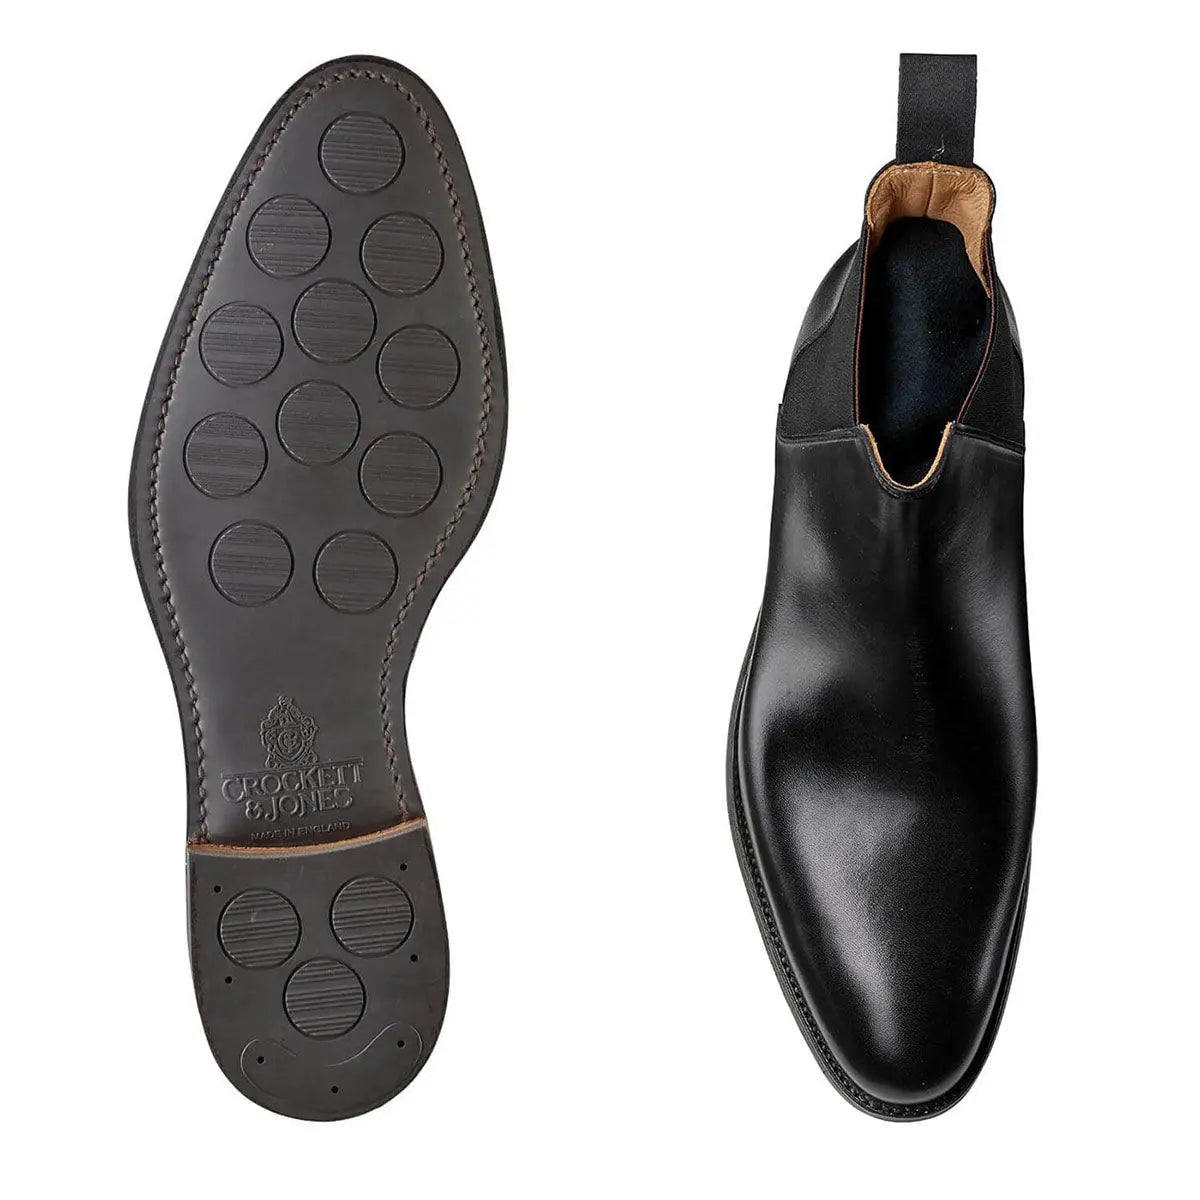 Chelsea 8 Black Calf Leather Boots  Crockett & Jones   